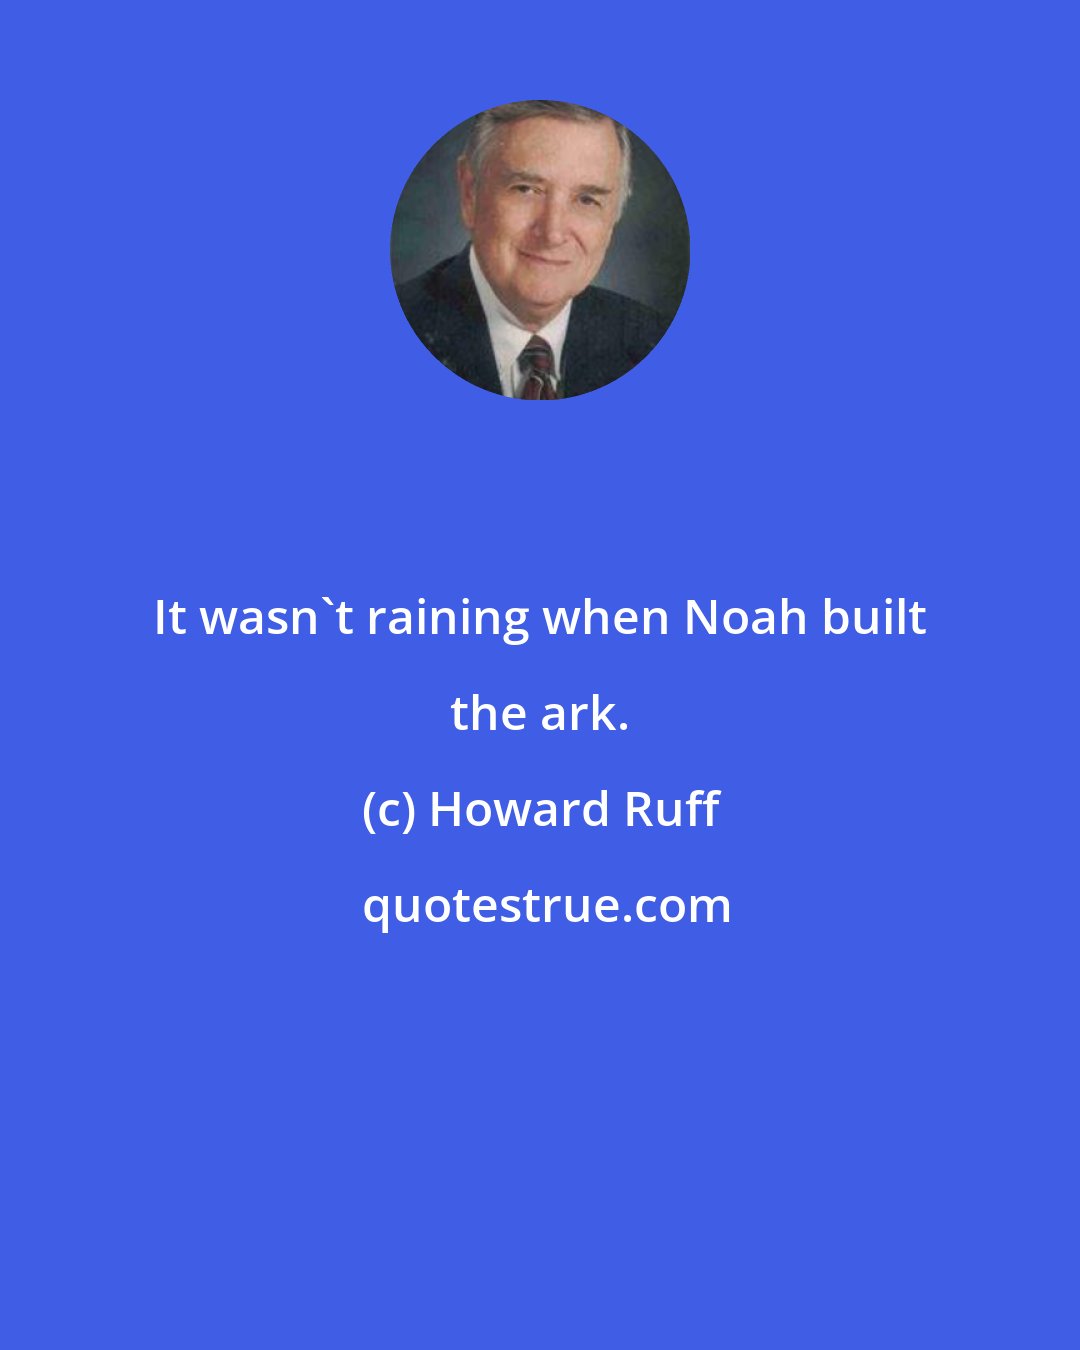 Howard Ruff: It wasn't raining when Noah built the ark.